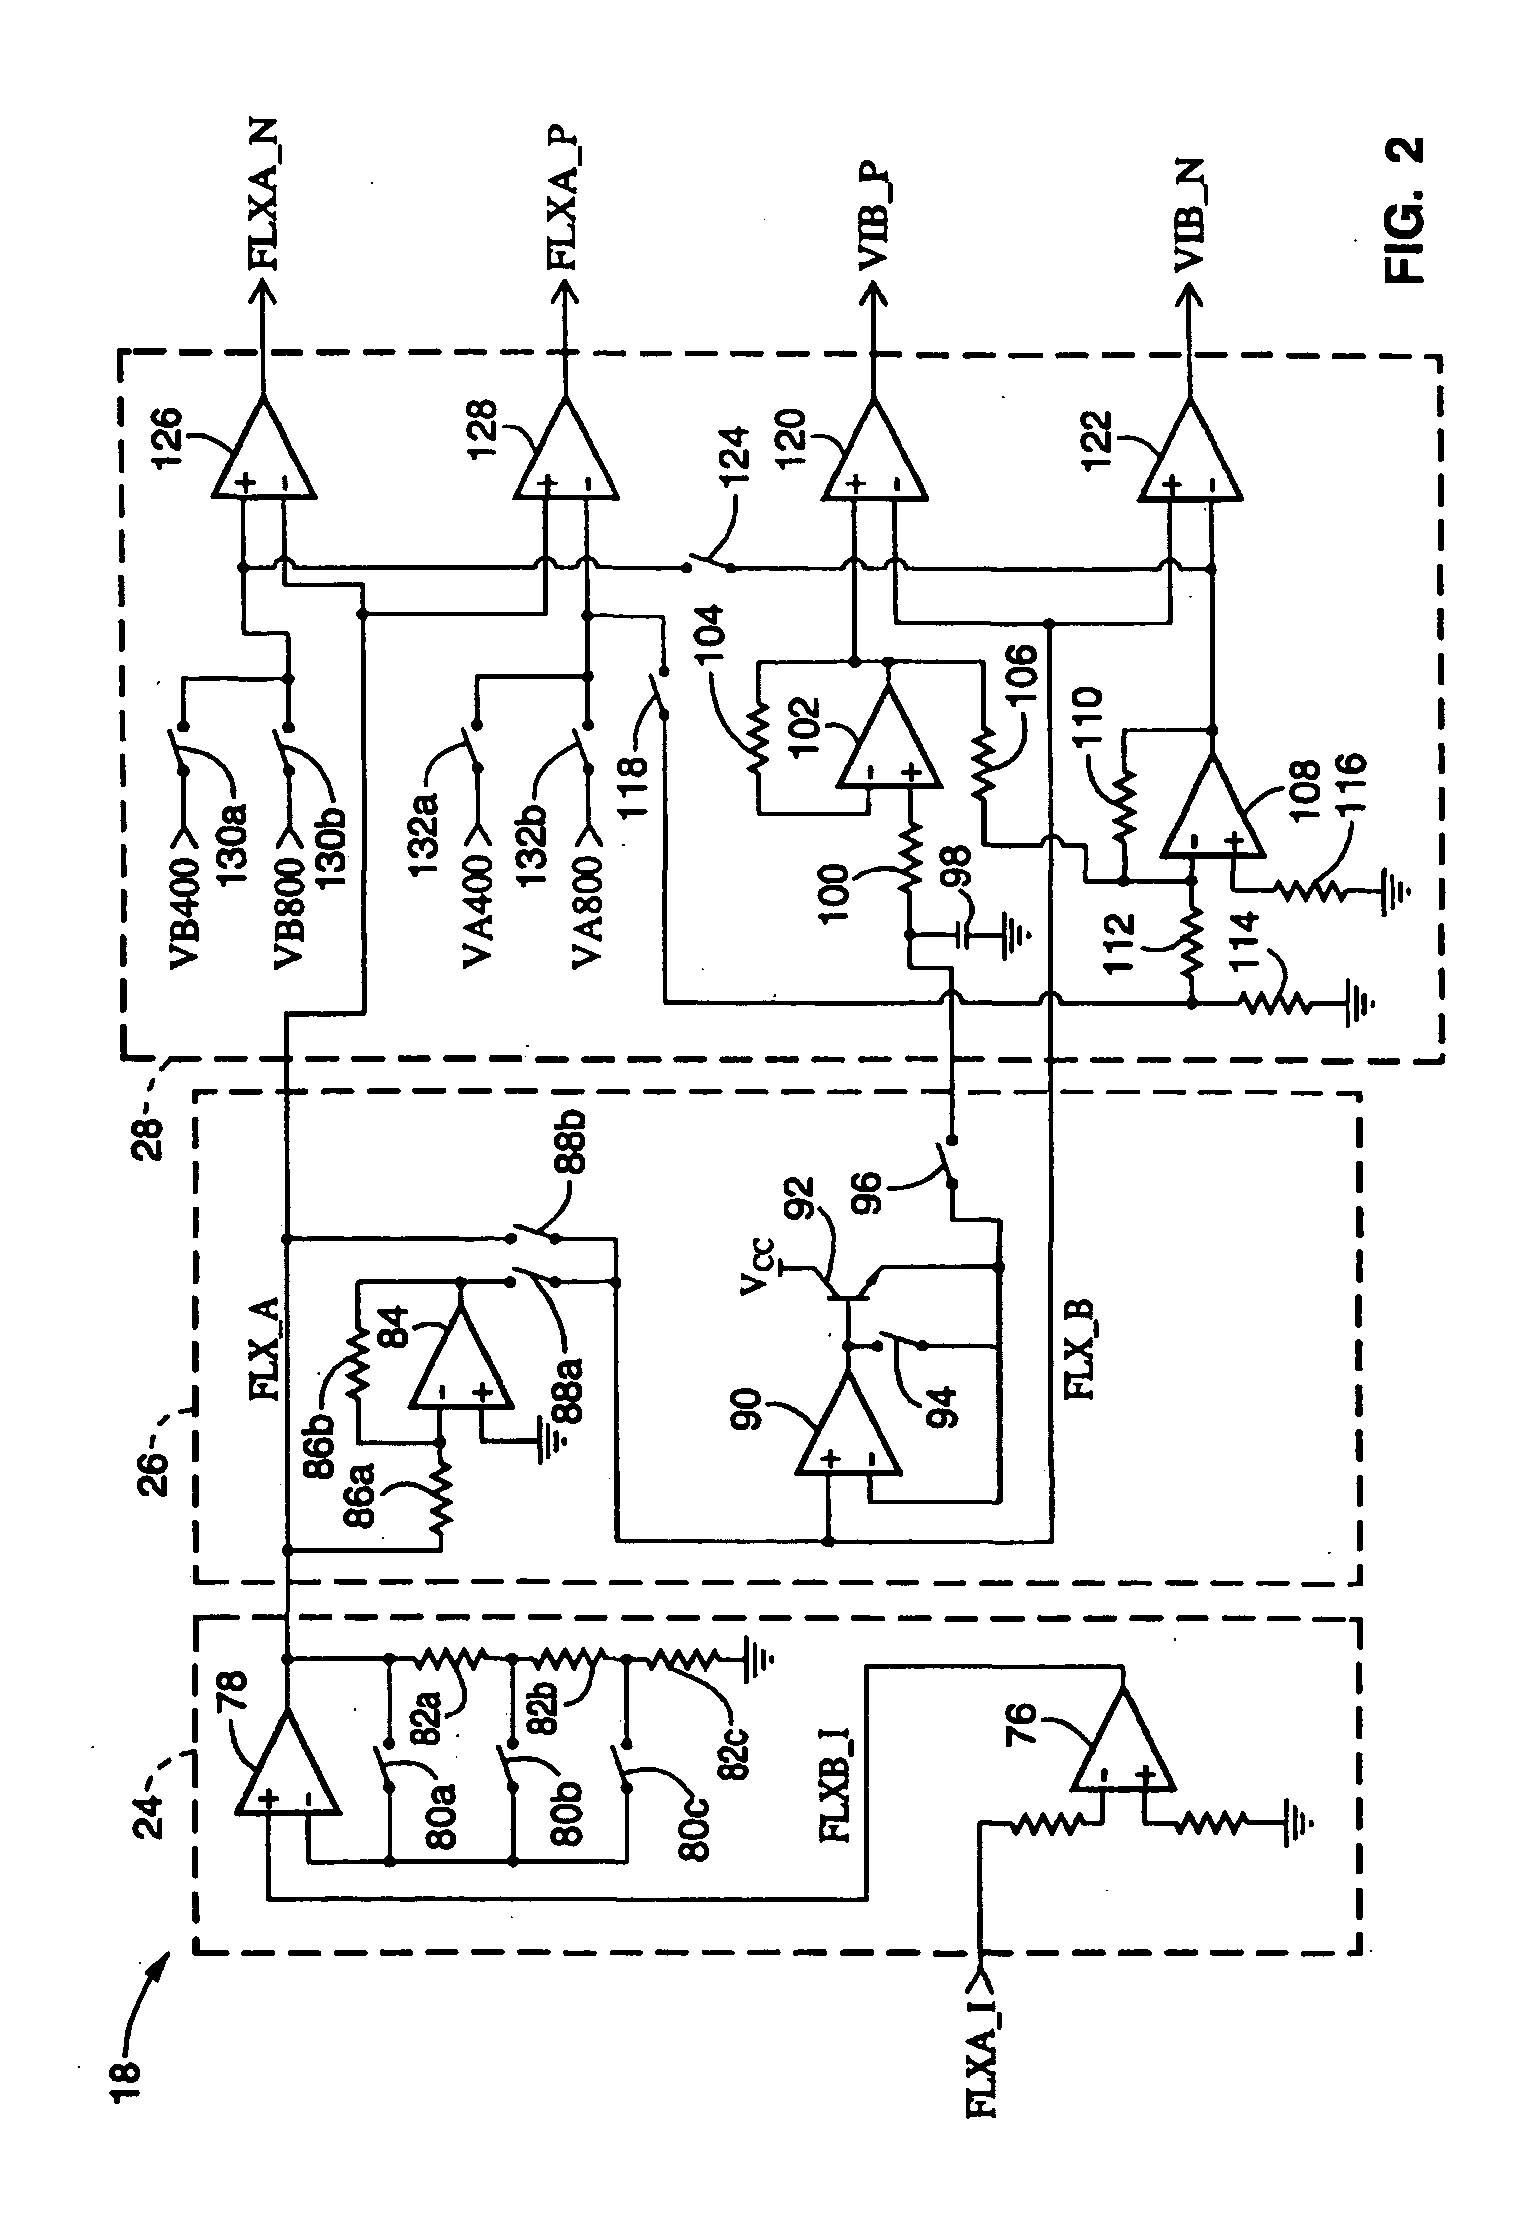 Method of eliminating impact/shock related false alarms in an acoustical glassbreak detector